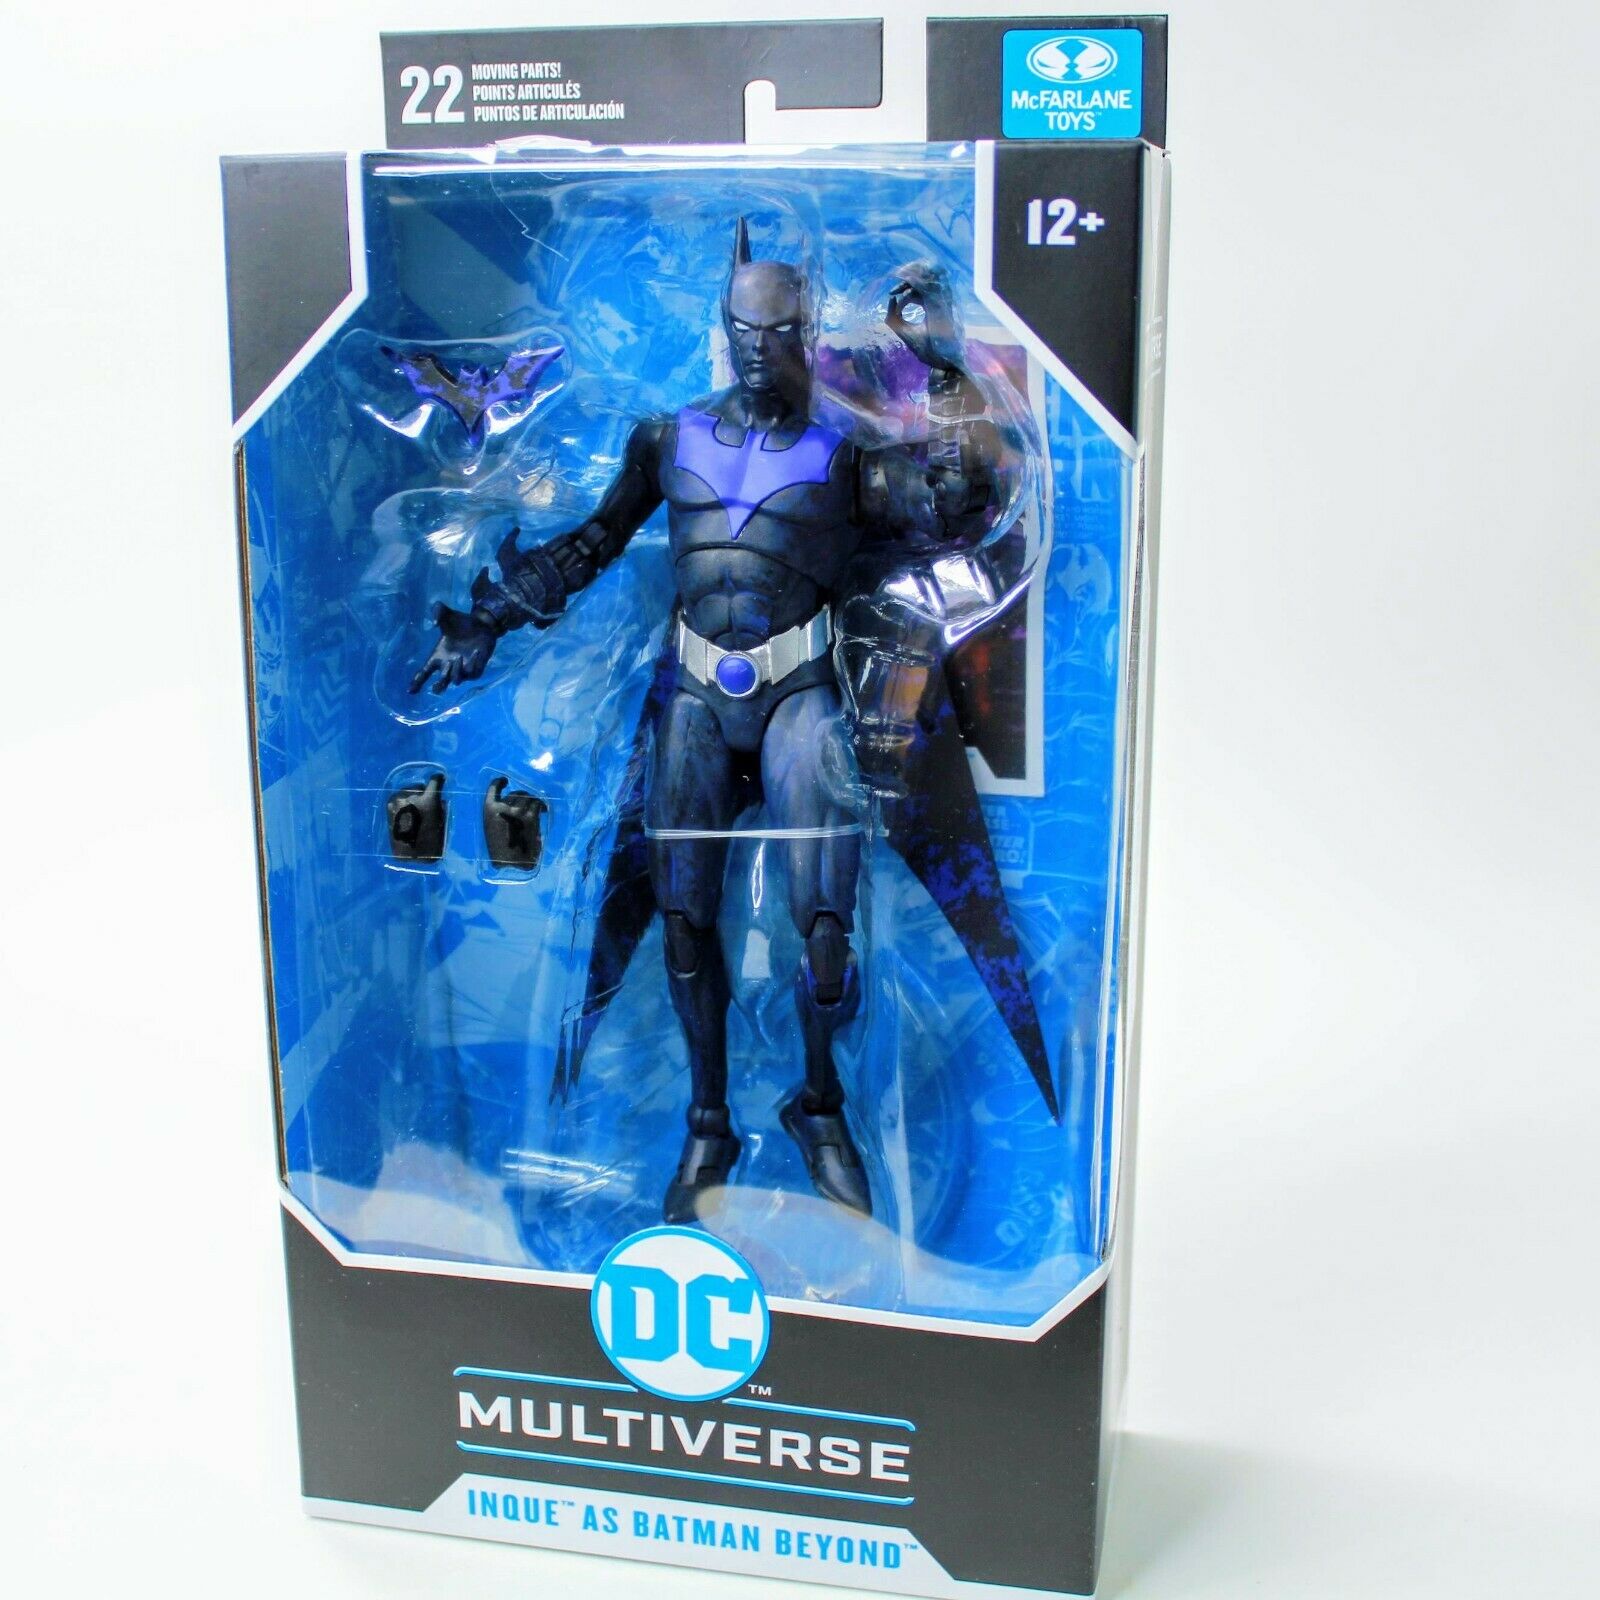 McFarlane Toys DC Multiverse Inque As Batman Beyond 7" Action Figure